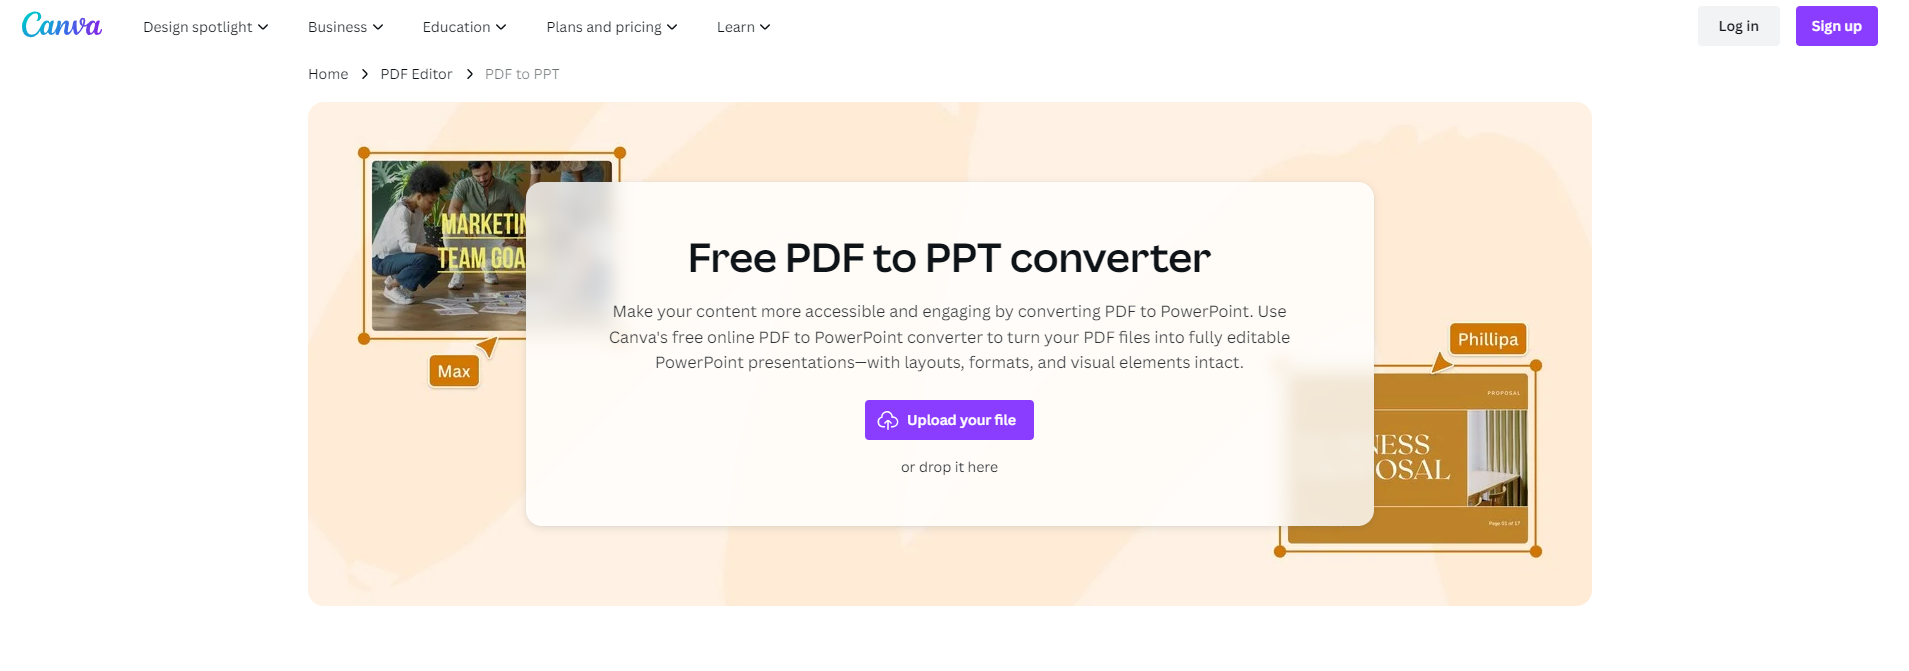 Canva Free PDF To PPT